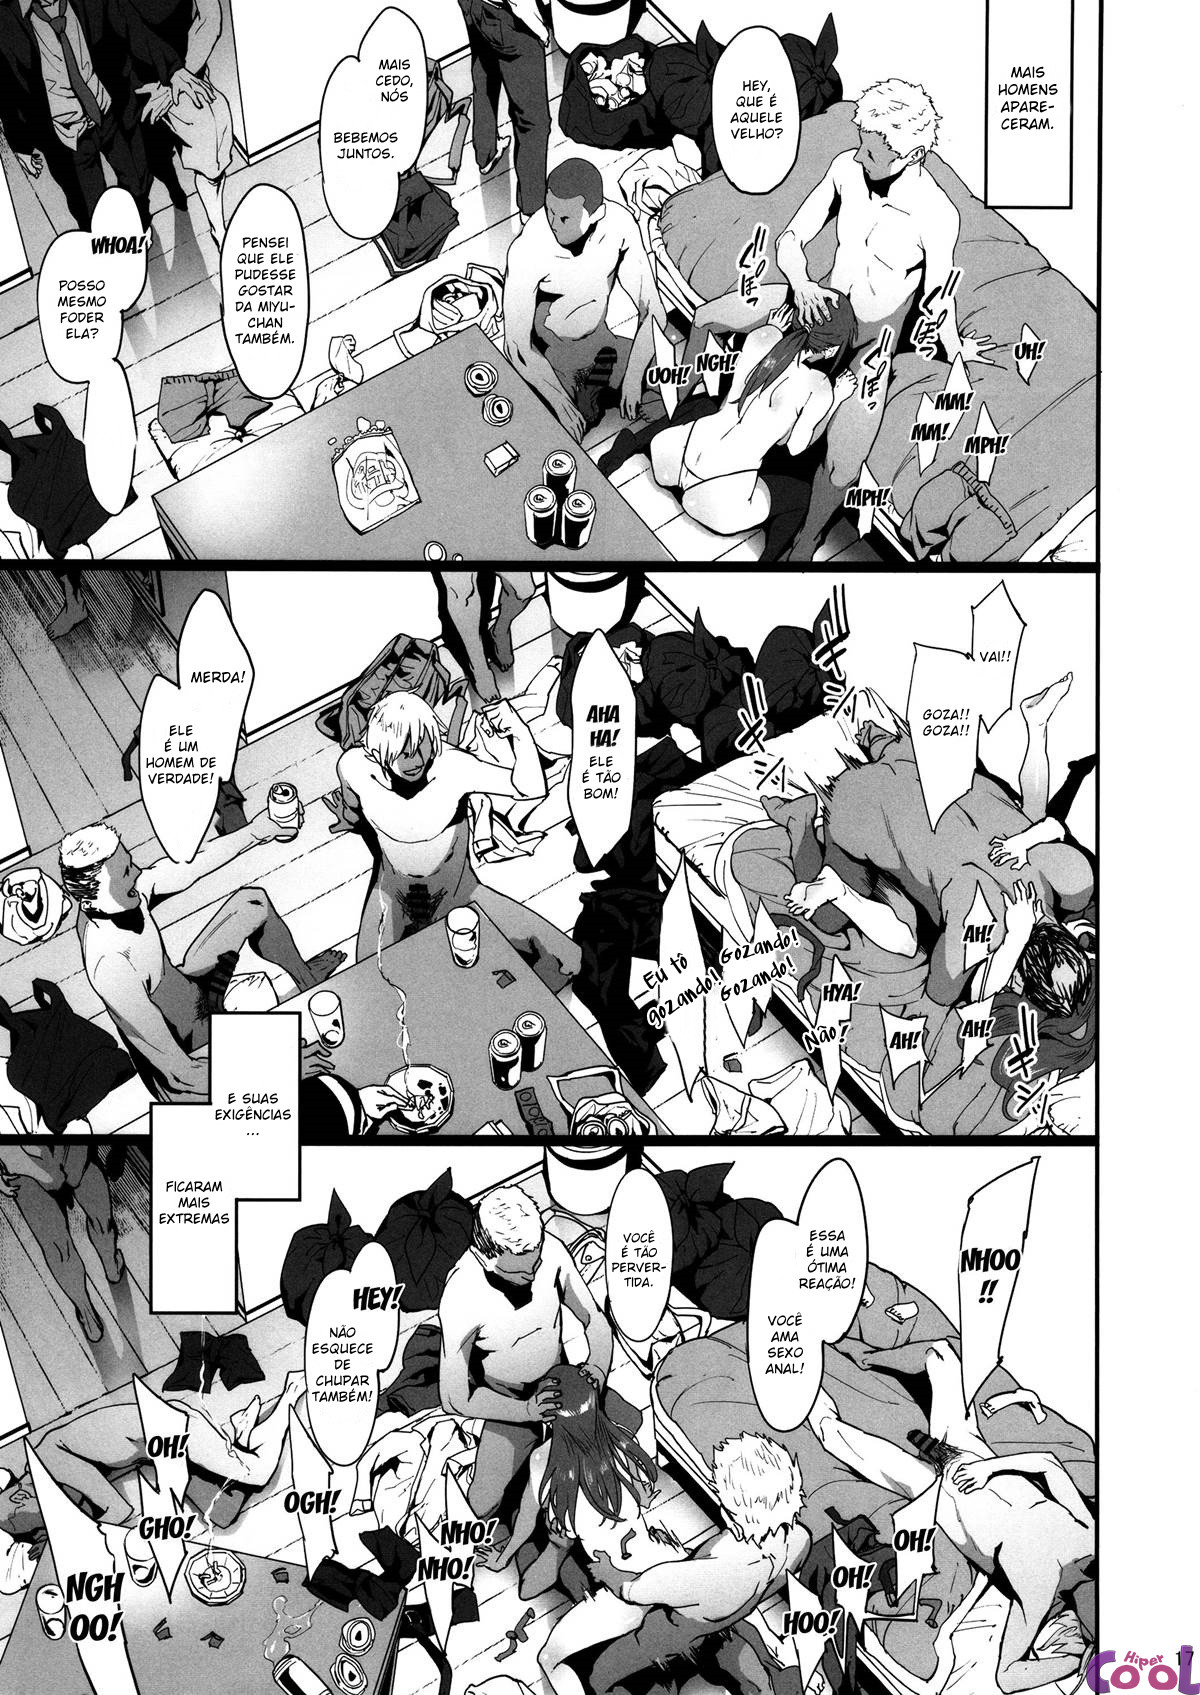 mifune-miyu-no-koukai-chapter-01-page-16.jpg